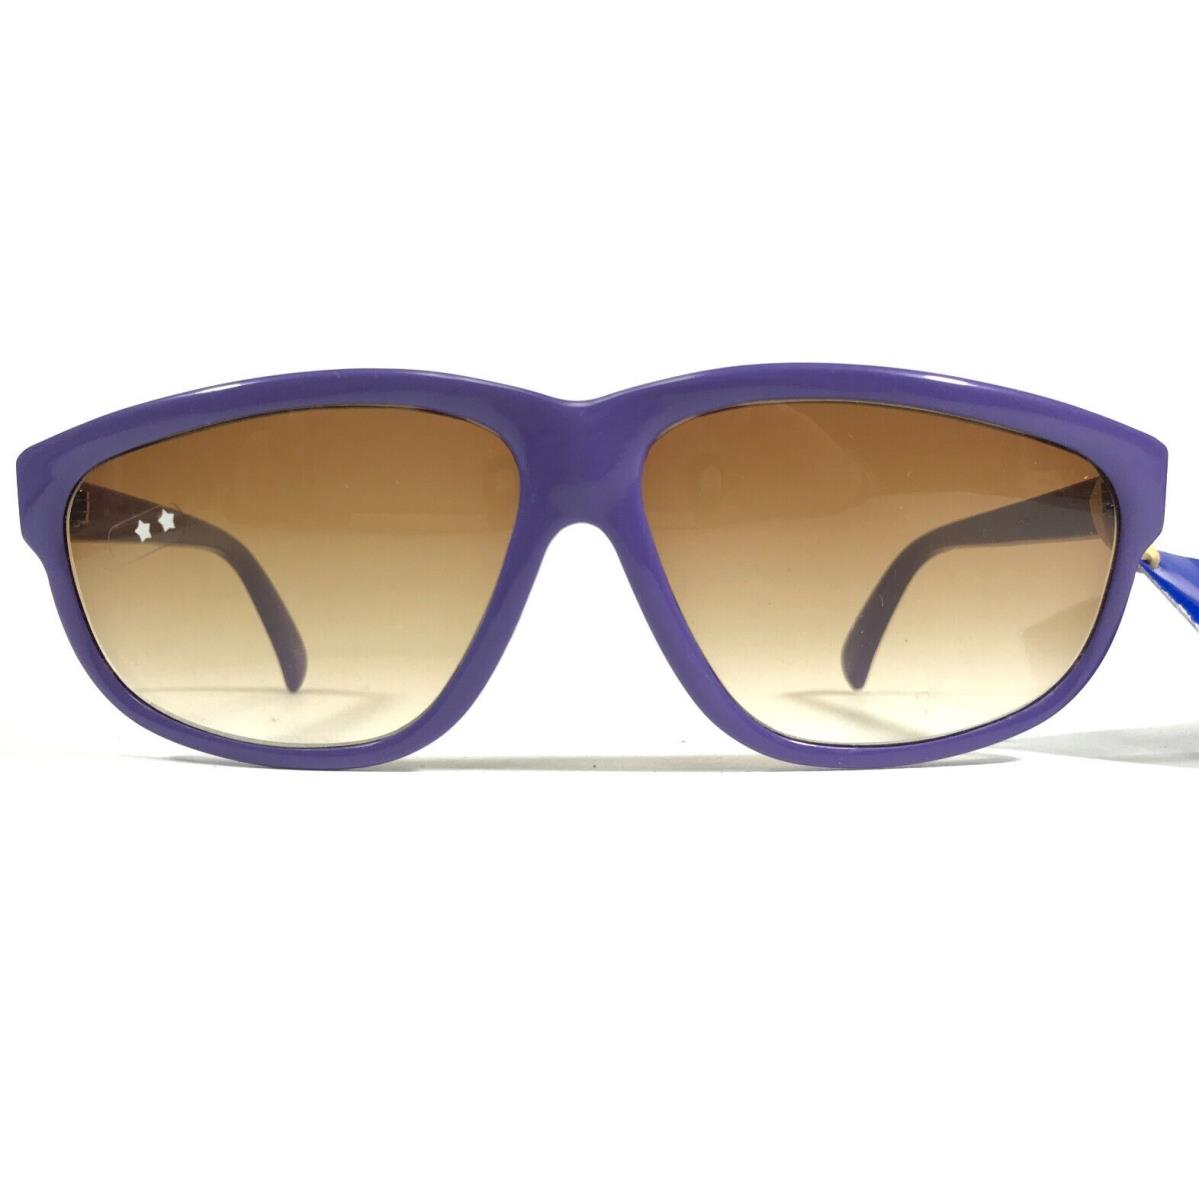 Vintage Cebe Sunglasses Matte Purple Square Frames with Brown Lenses